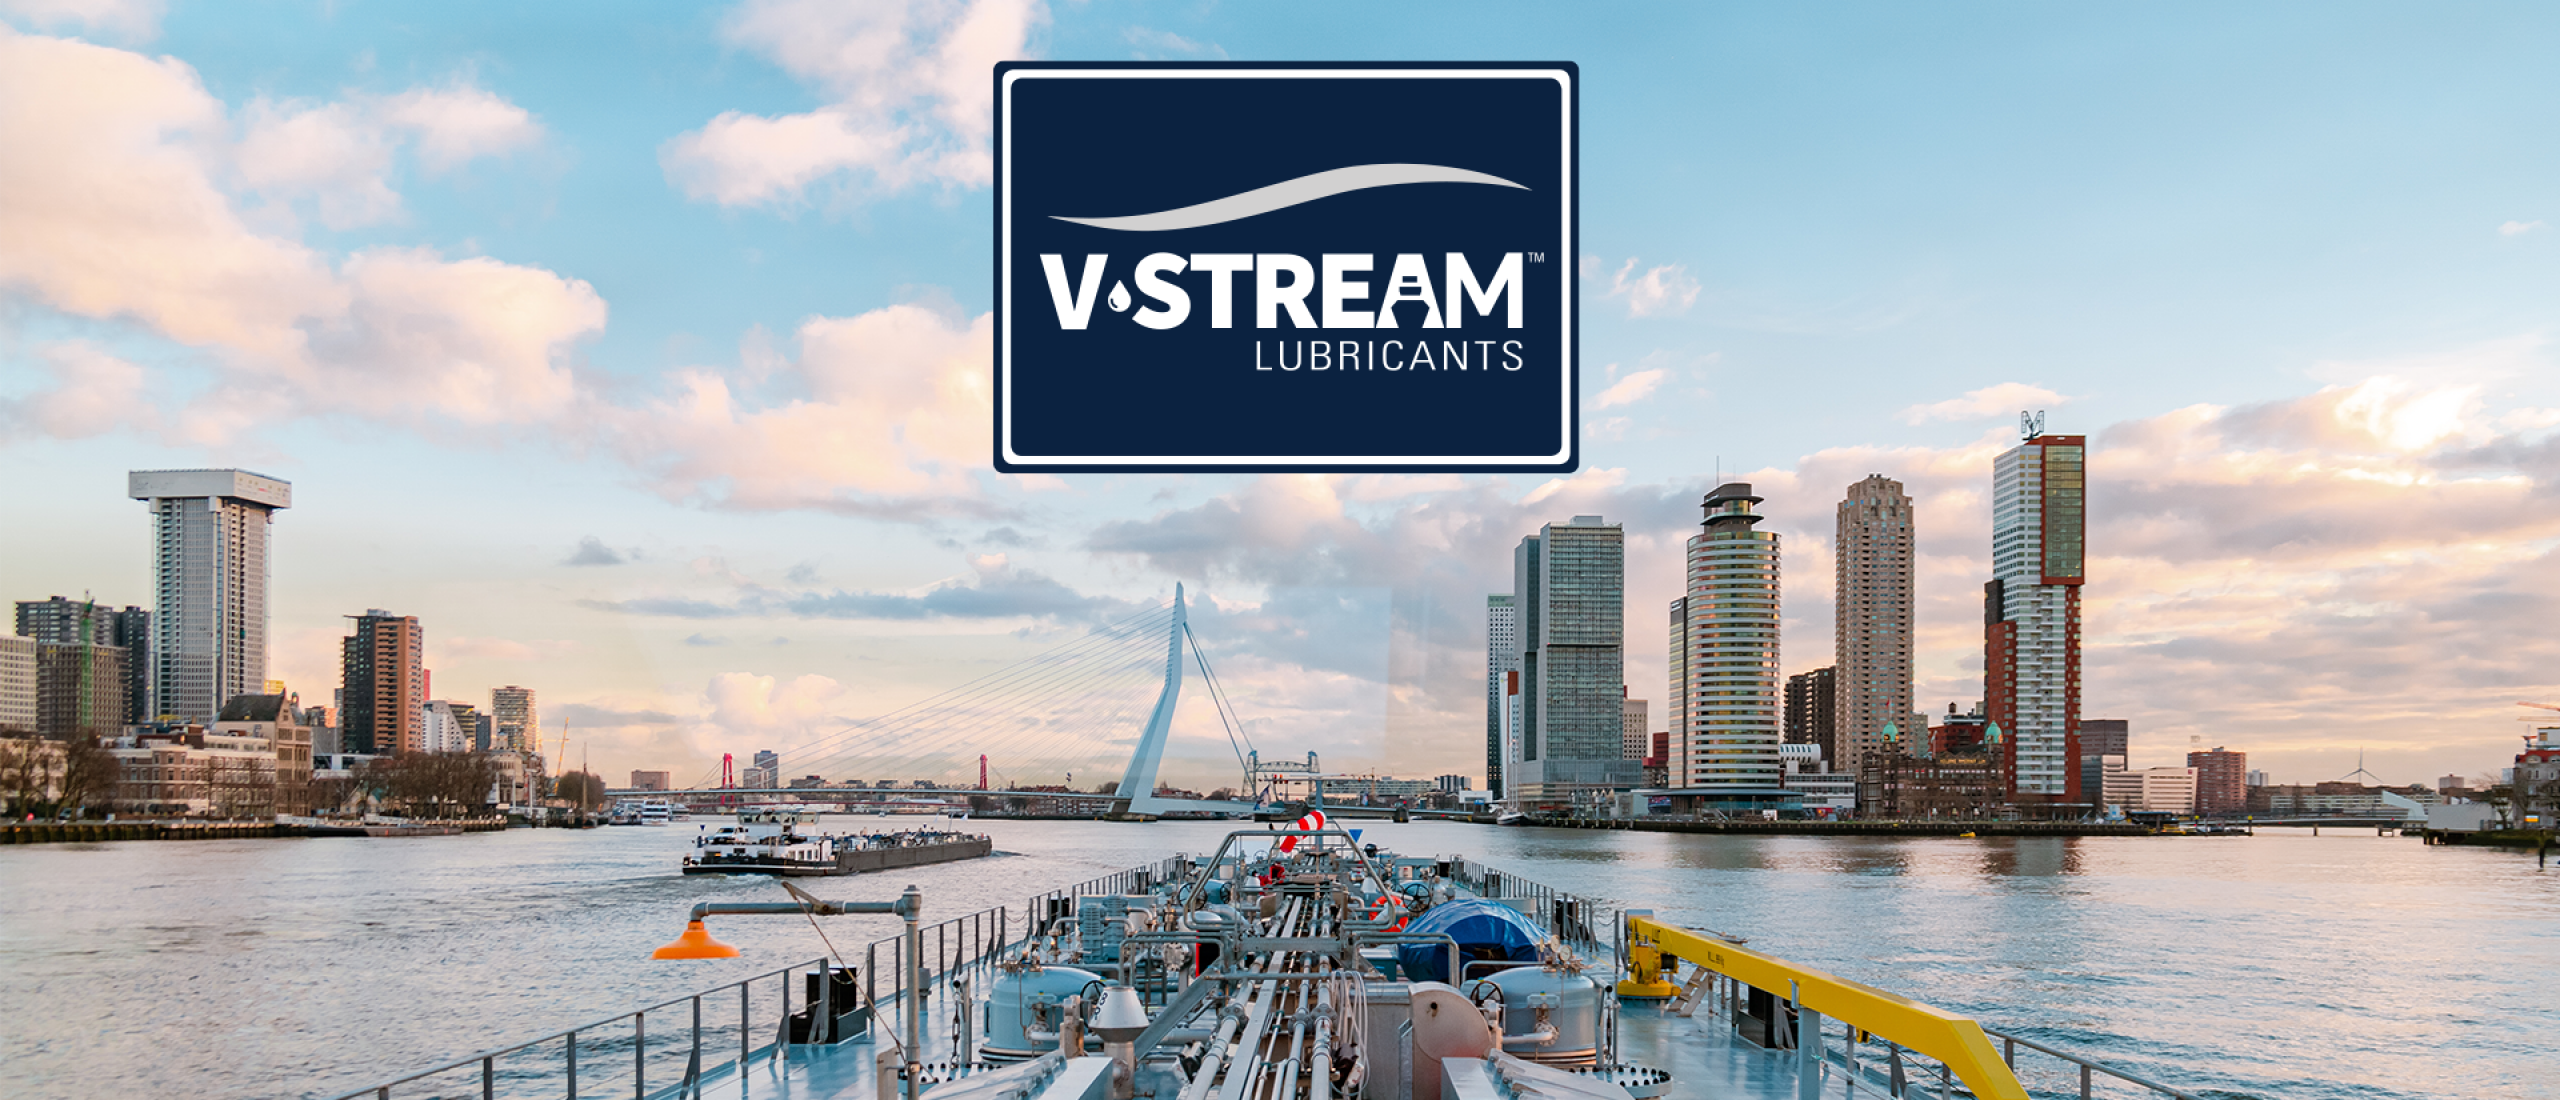 V-STREAM™ deelnemer aan Maritime Industry 2023!